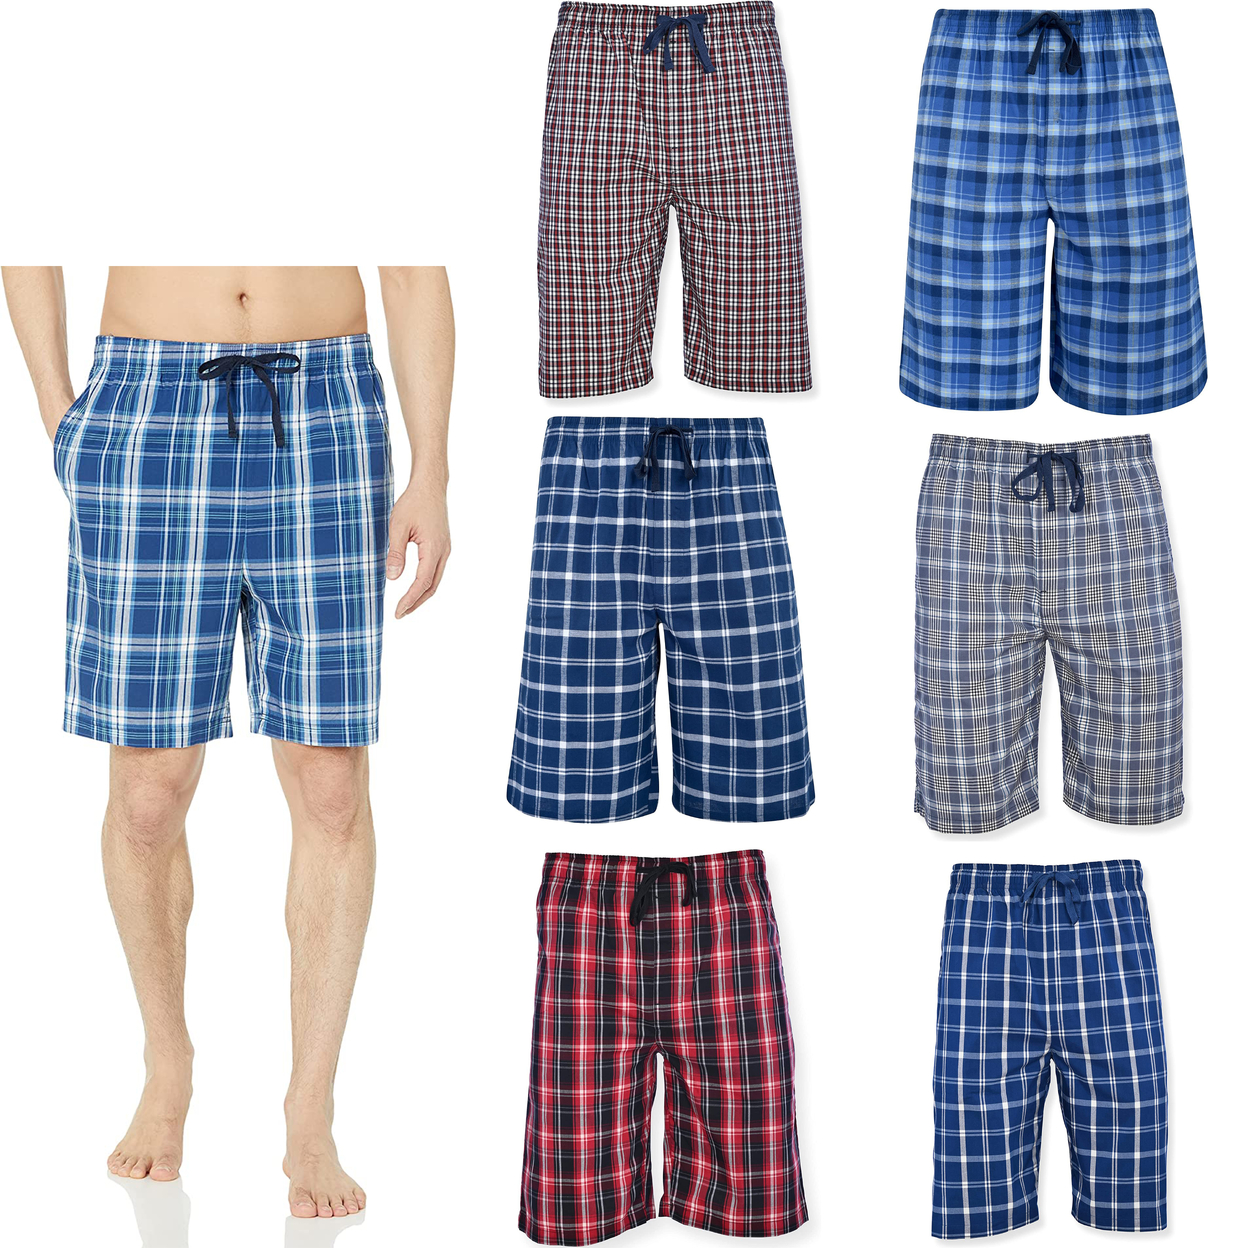 2-Pack: Men's Ultra Soft Plaid Lounge Pajama Sleep Wear Shorts - Red & Blue, Medium